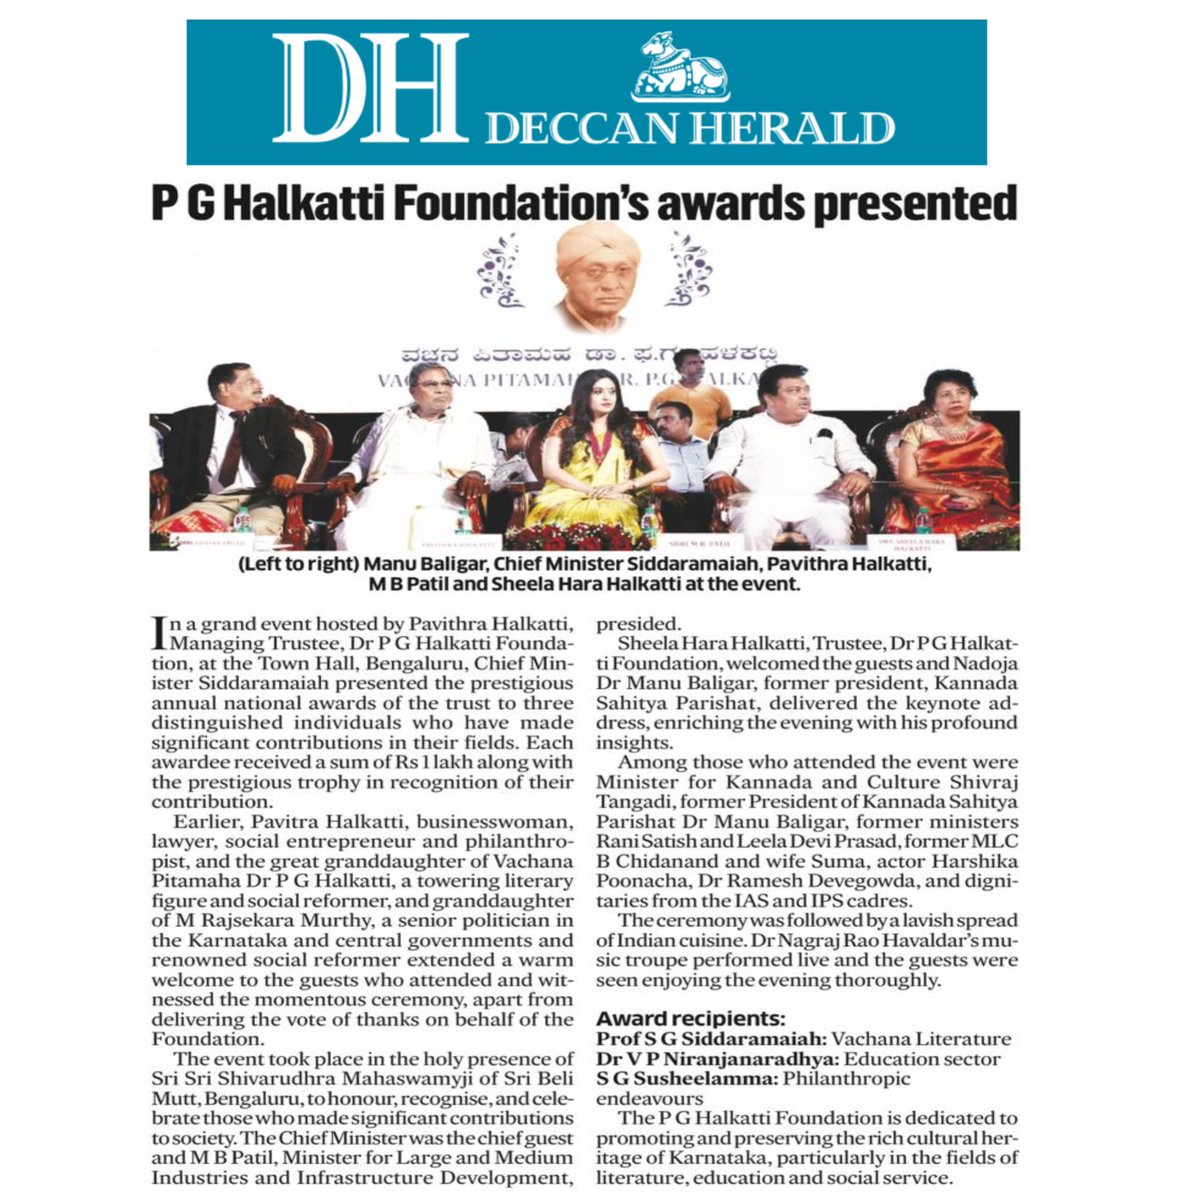 DR. P.G. Halkatti Foundation National Awards Ceremony 2023 Coverage by Deccan Herald #siddaramaiah #mbpatil #manubaligar #shivarajtangadagi #susheelamafoundation #DeccanHerald #Newspaper #Current Affairs #News #BreakingNews #IndiaNews #Media #Journalism